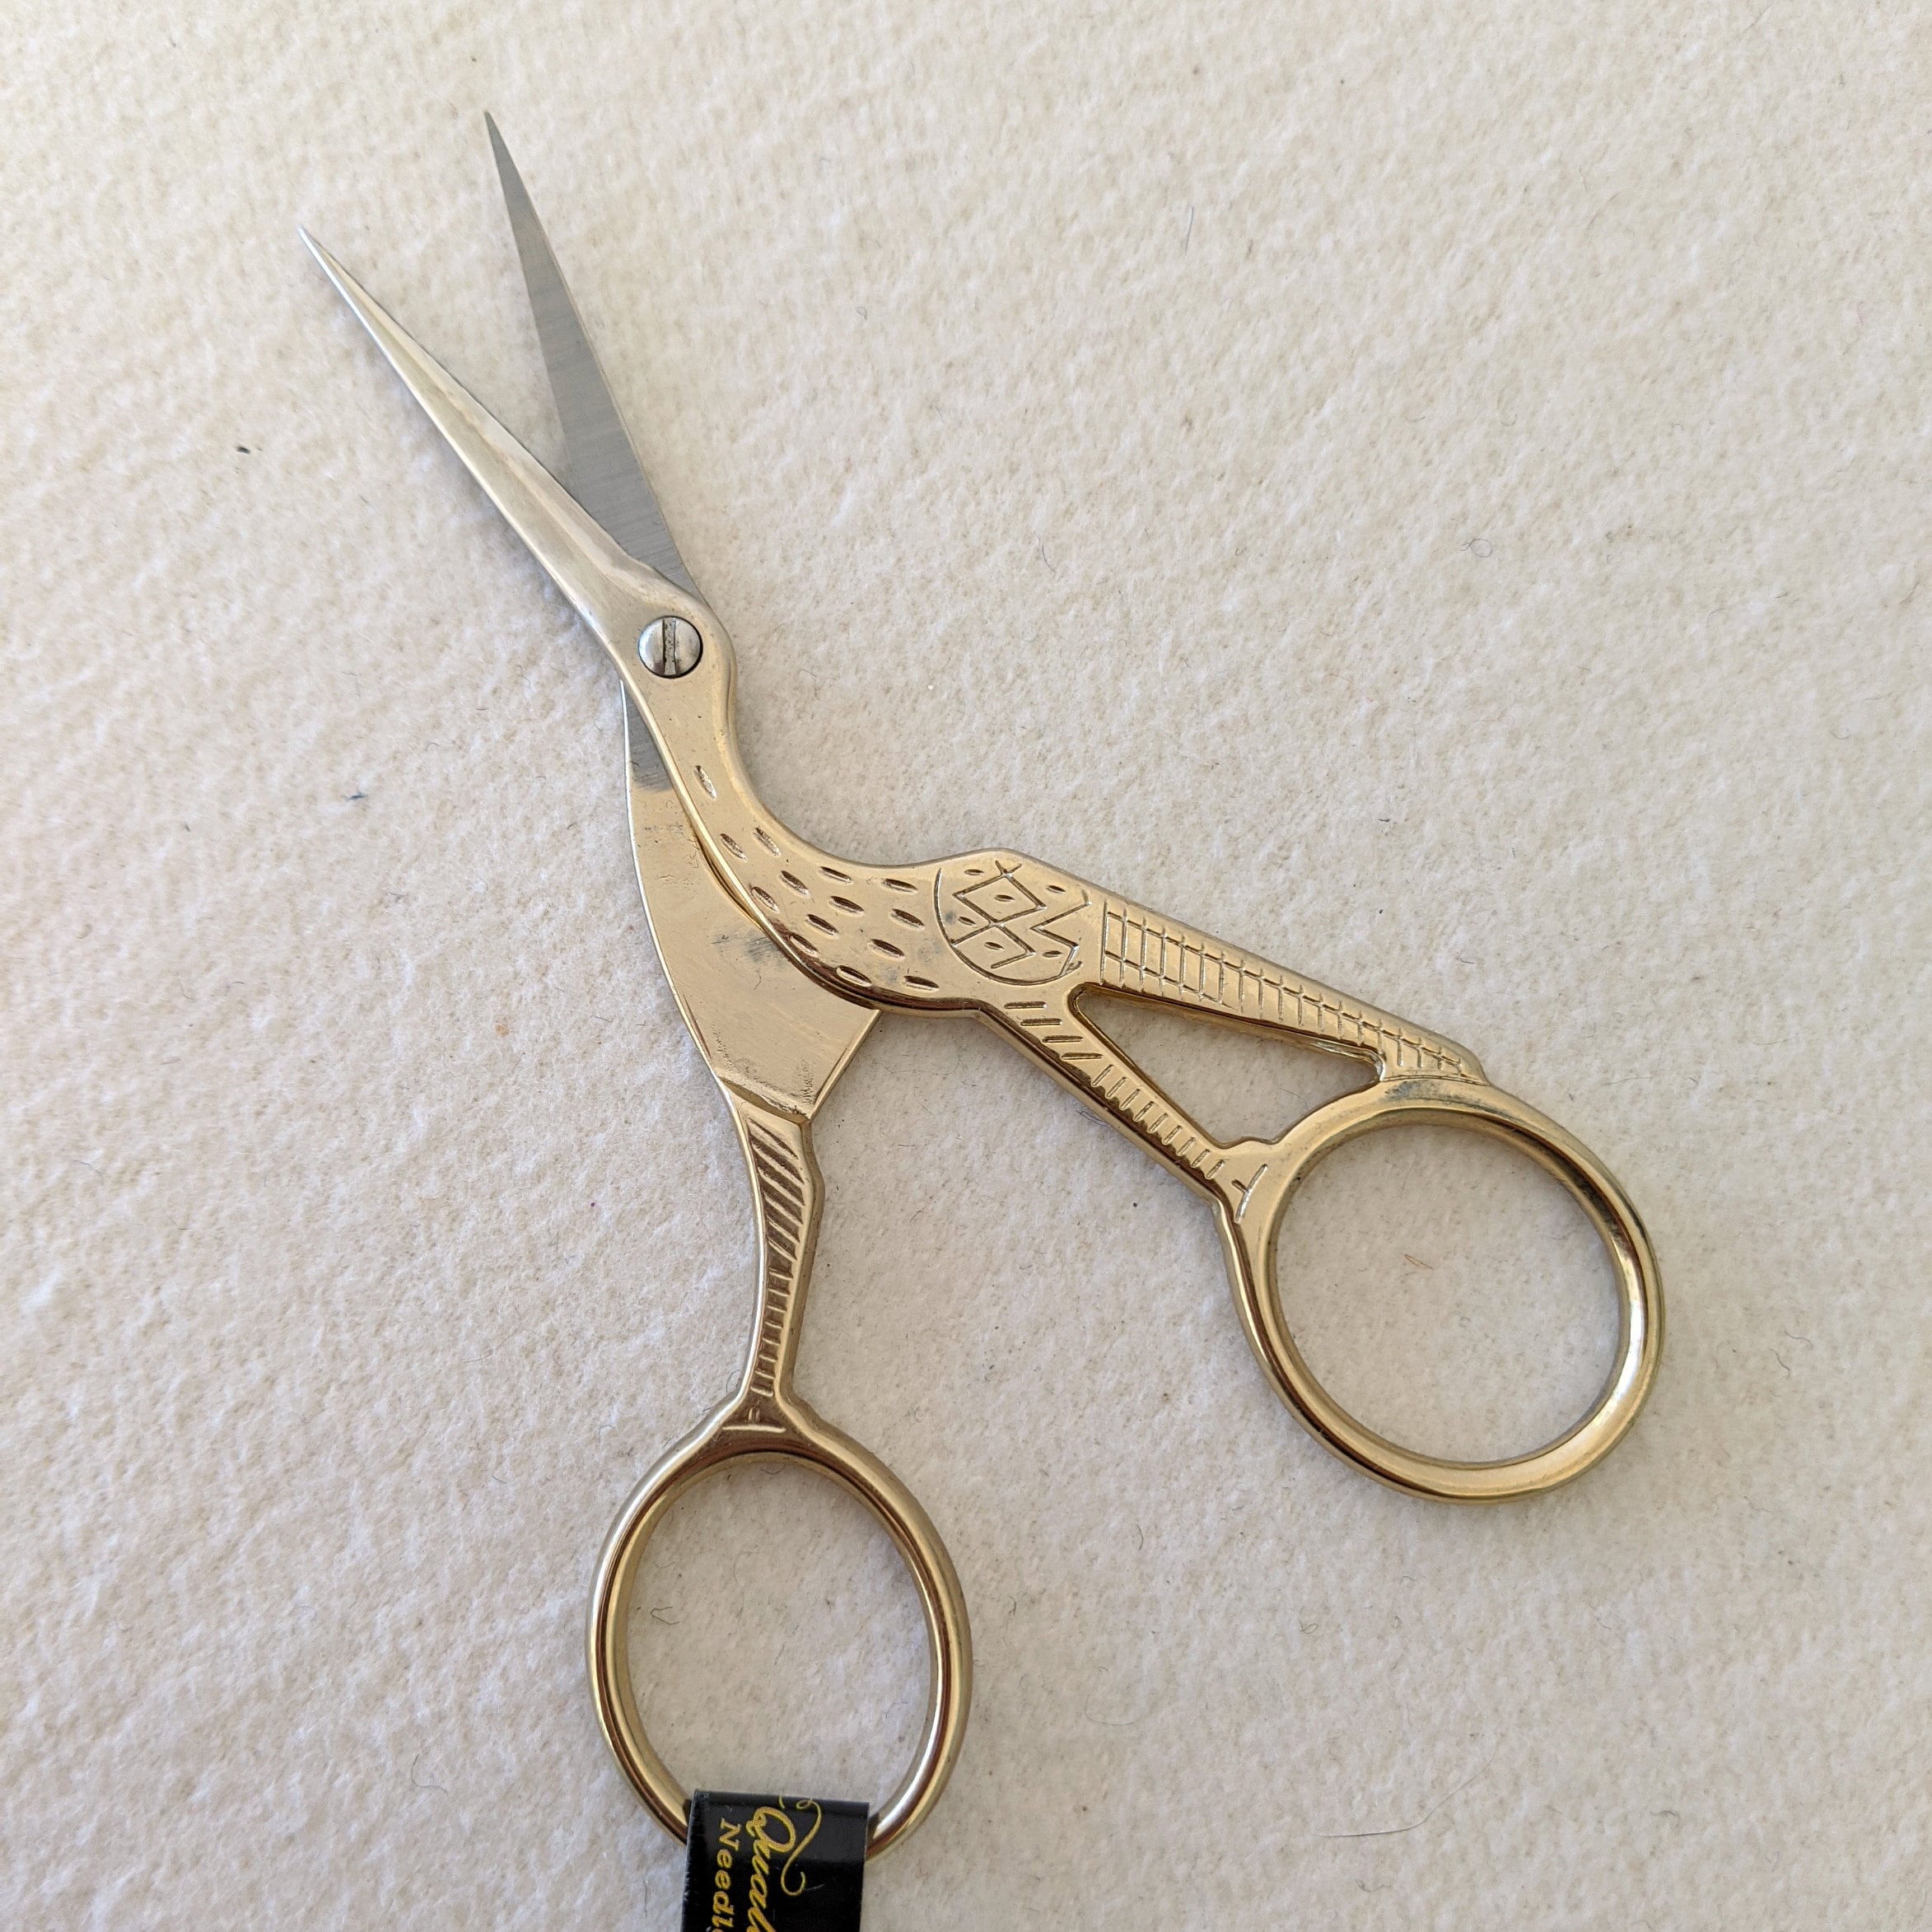 Milward Stork Embroidery Scissors 3 Inch / 9cm Rainbow Design